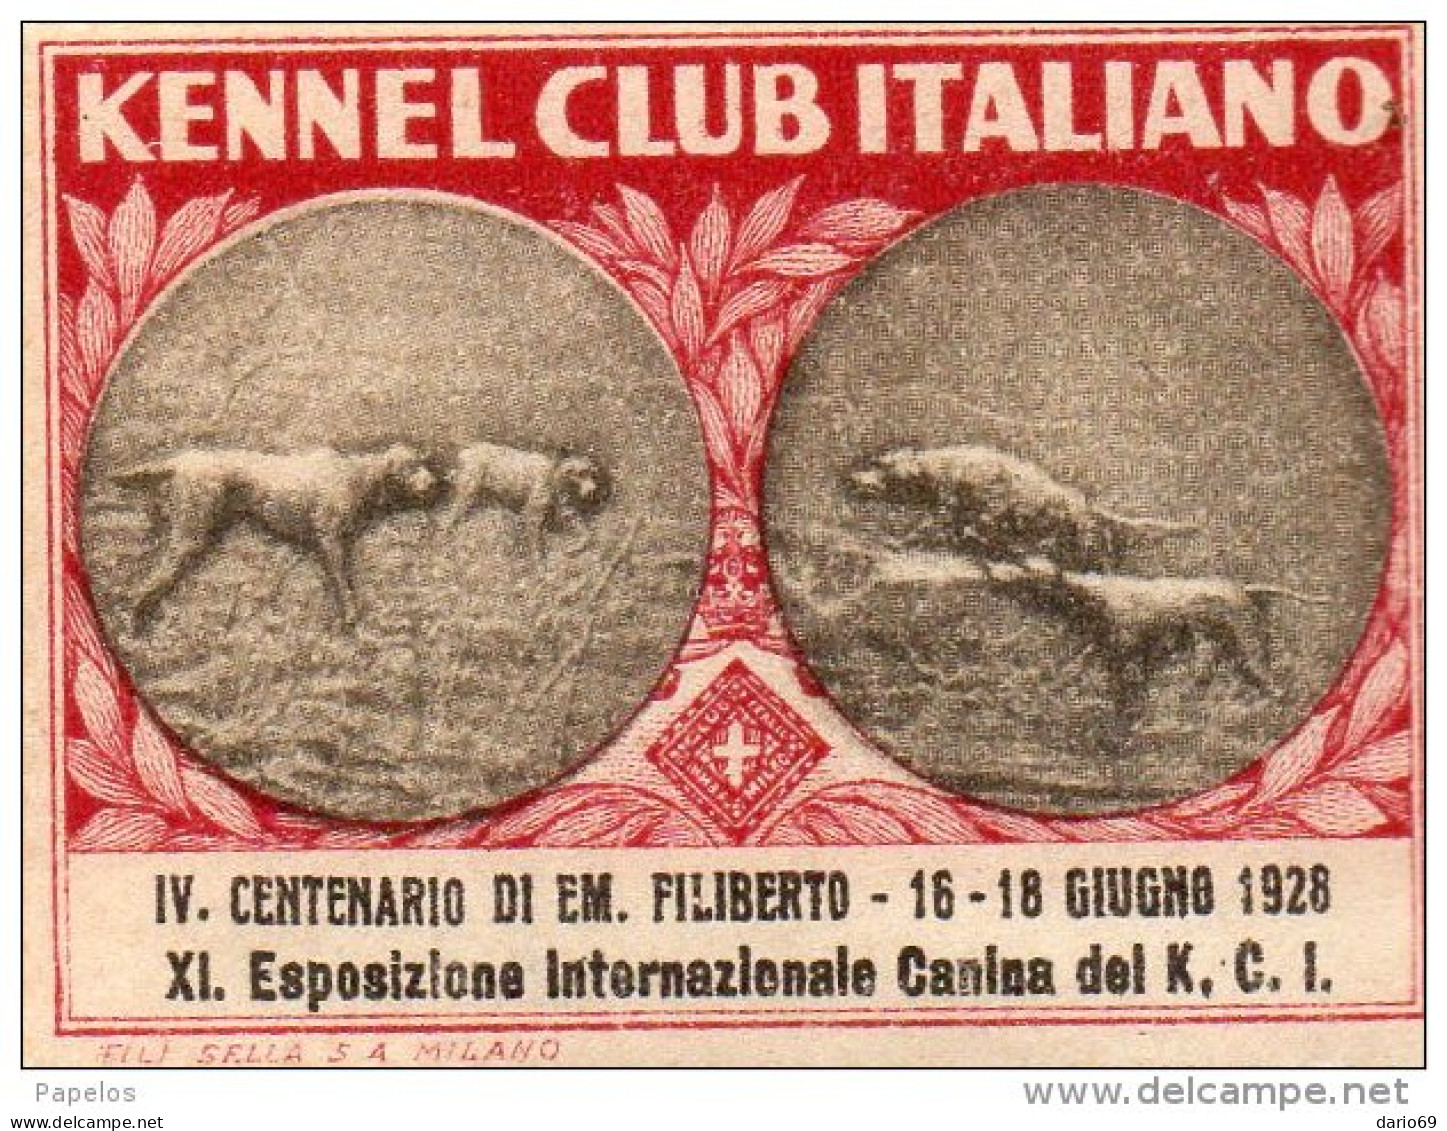 1928 KENNEL CLUB ITALIANO - Erinnophilie